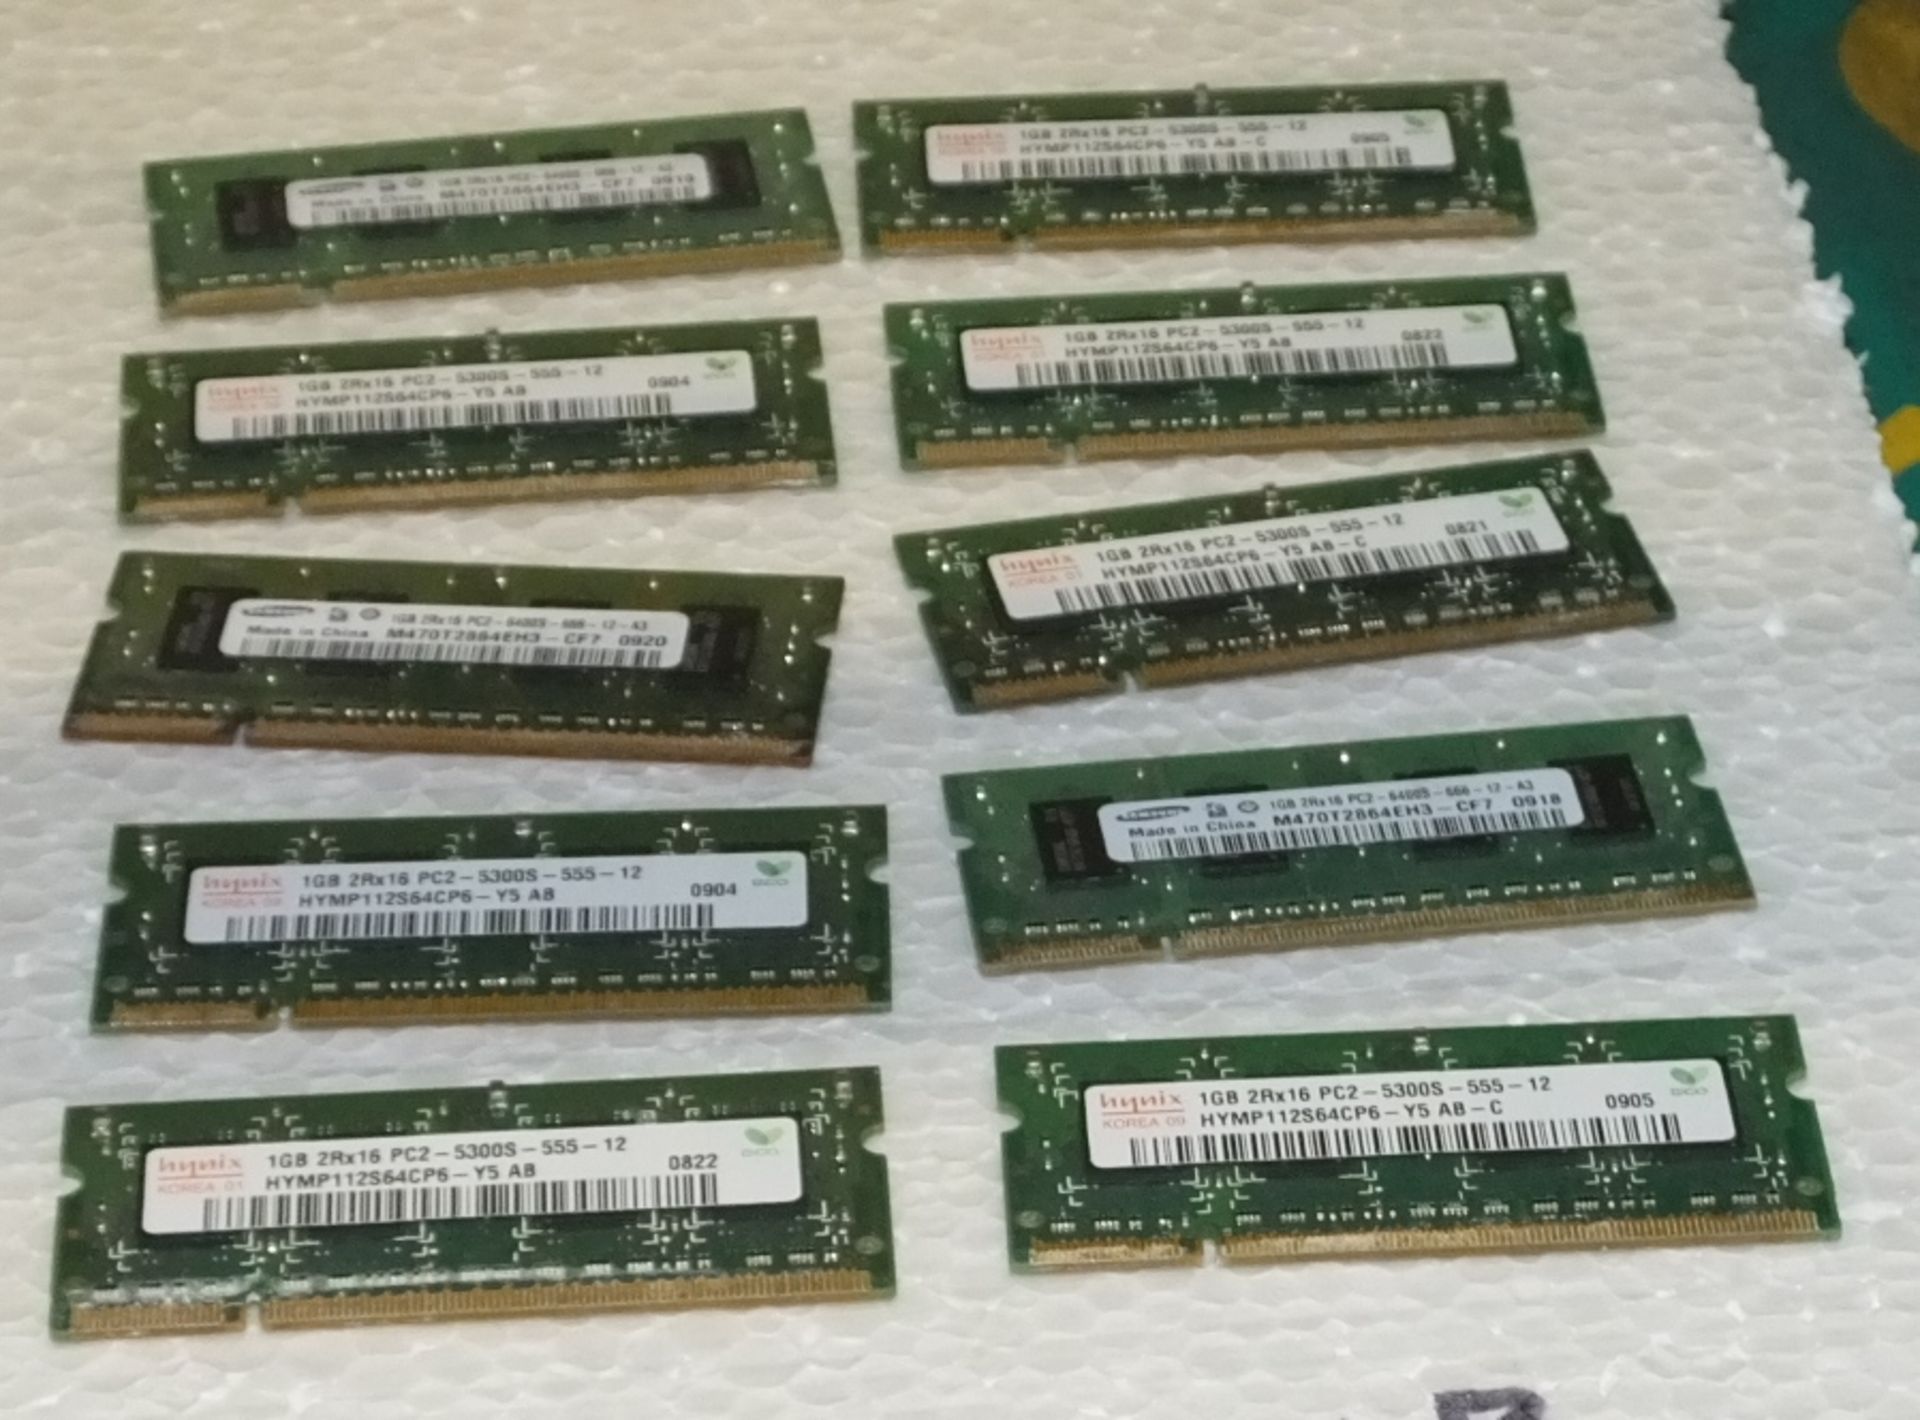 10x 1GB 2Rx 16 PC-2 - 6400S - 666 - 12 - A3